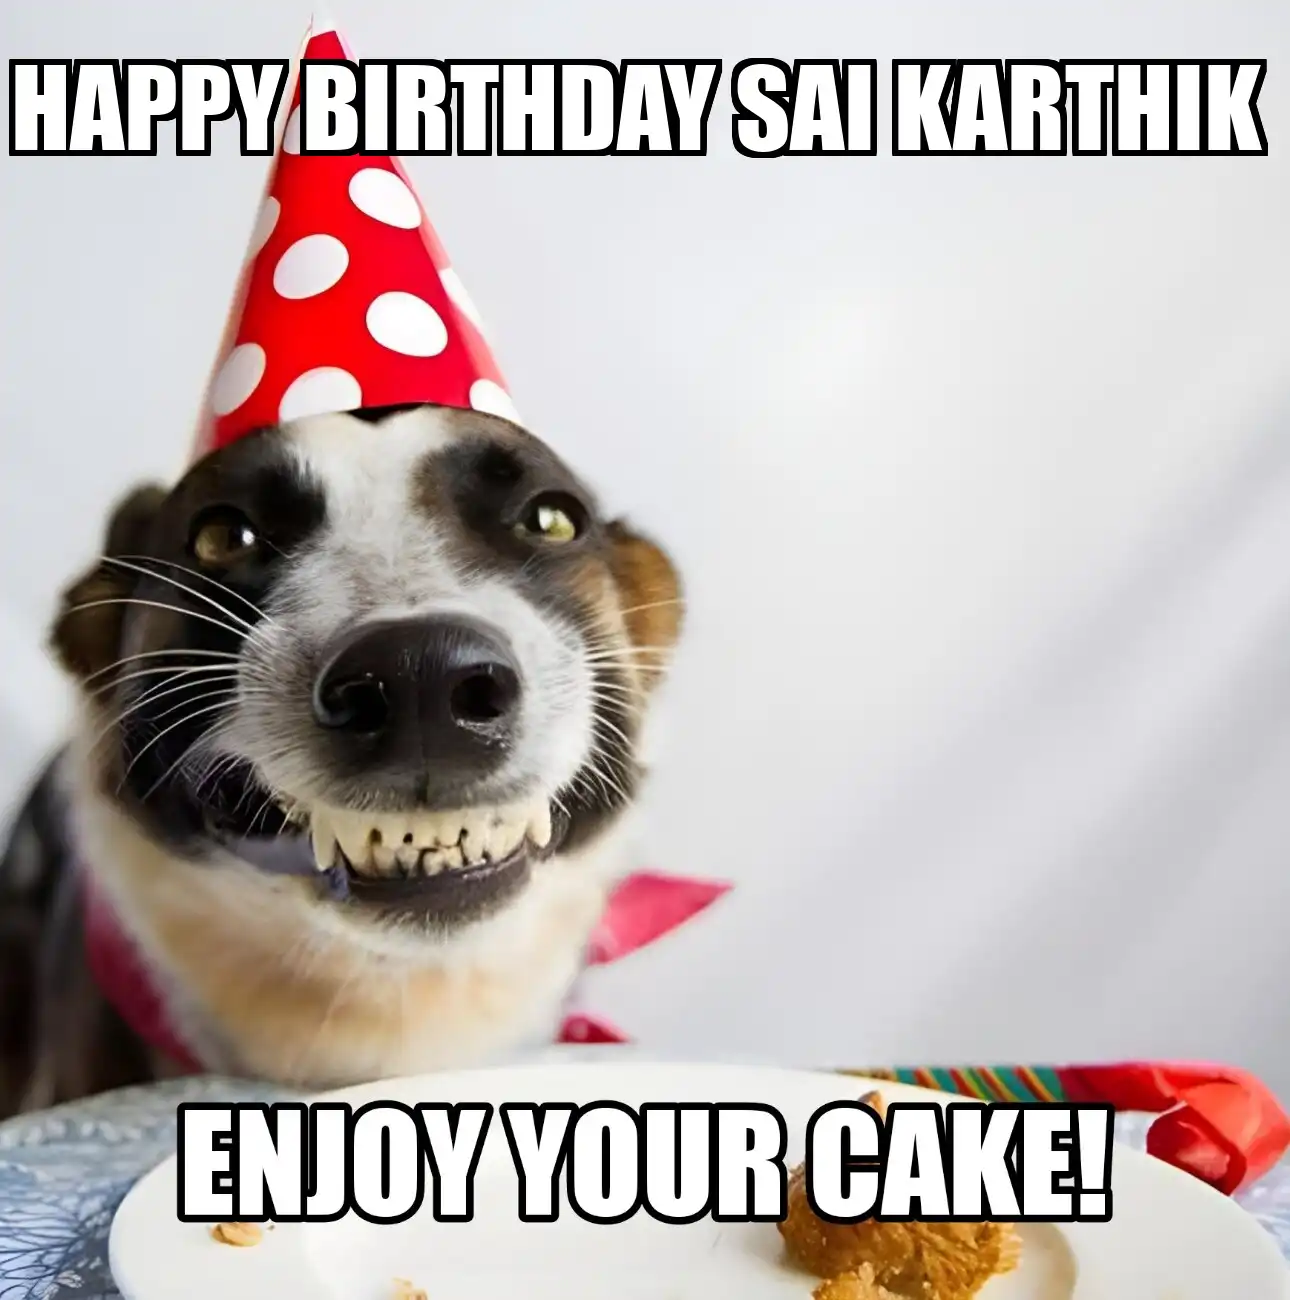 Happy Birthday Sai Karthik Enjoy Your Cake Dog Meme